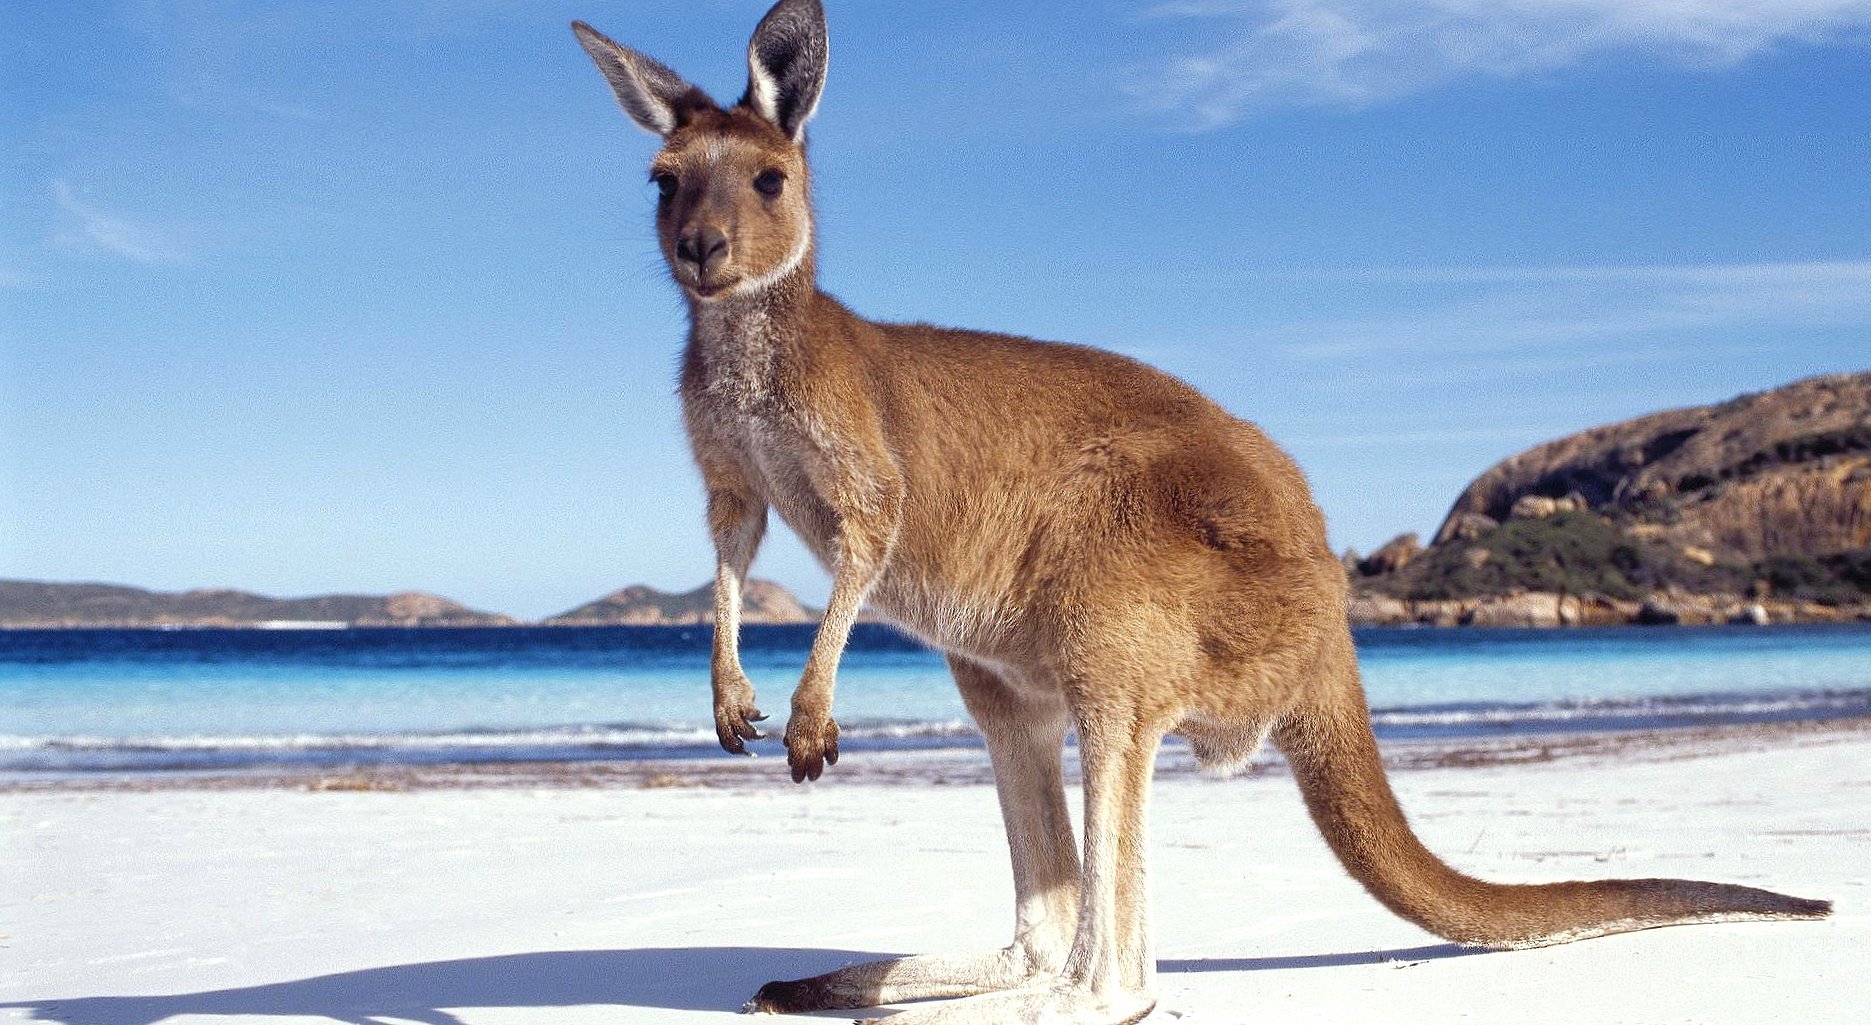 Beach kangaroo at 1024 x 1024 iPad size wallpapers HD quality